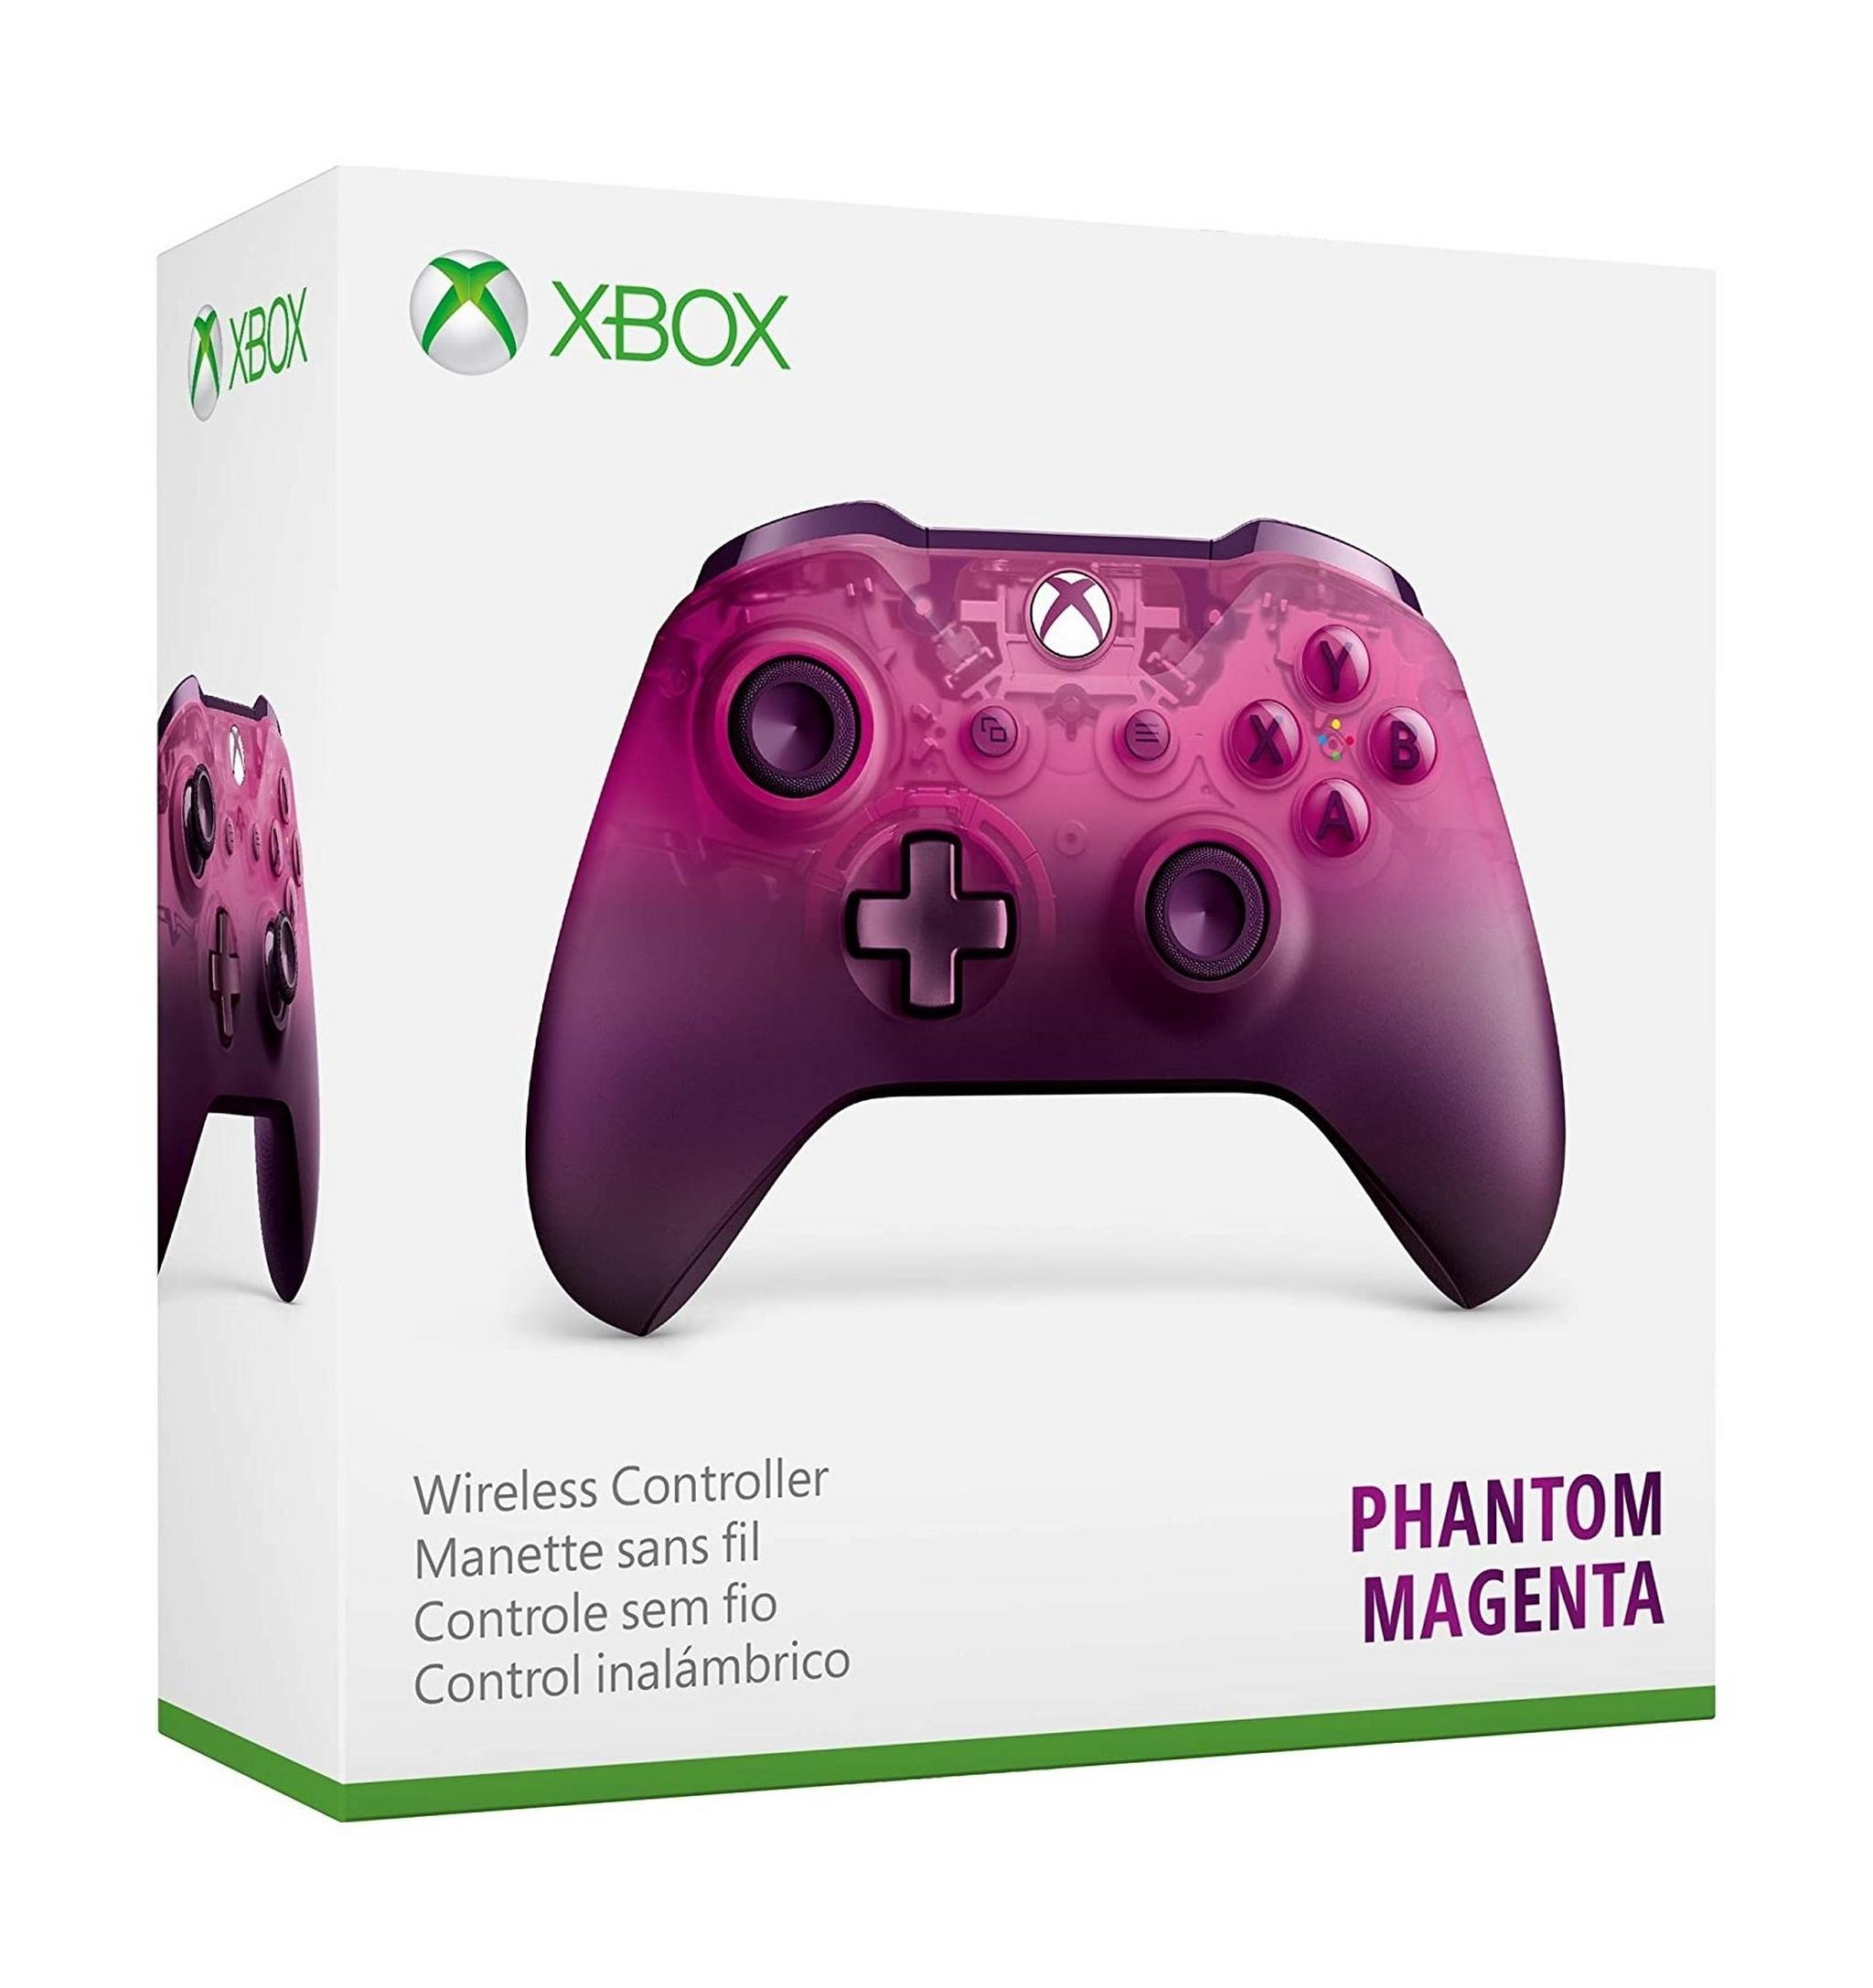 Xbox Wireless Controller Special Edition - Phantom Magenta